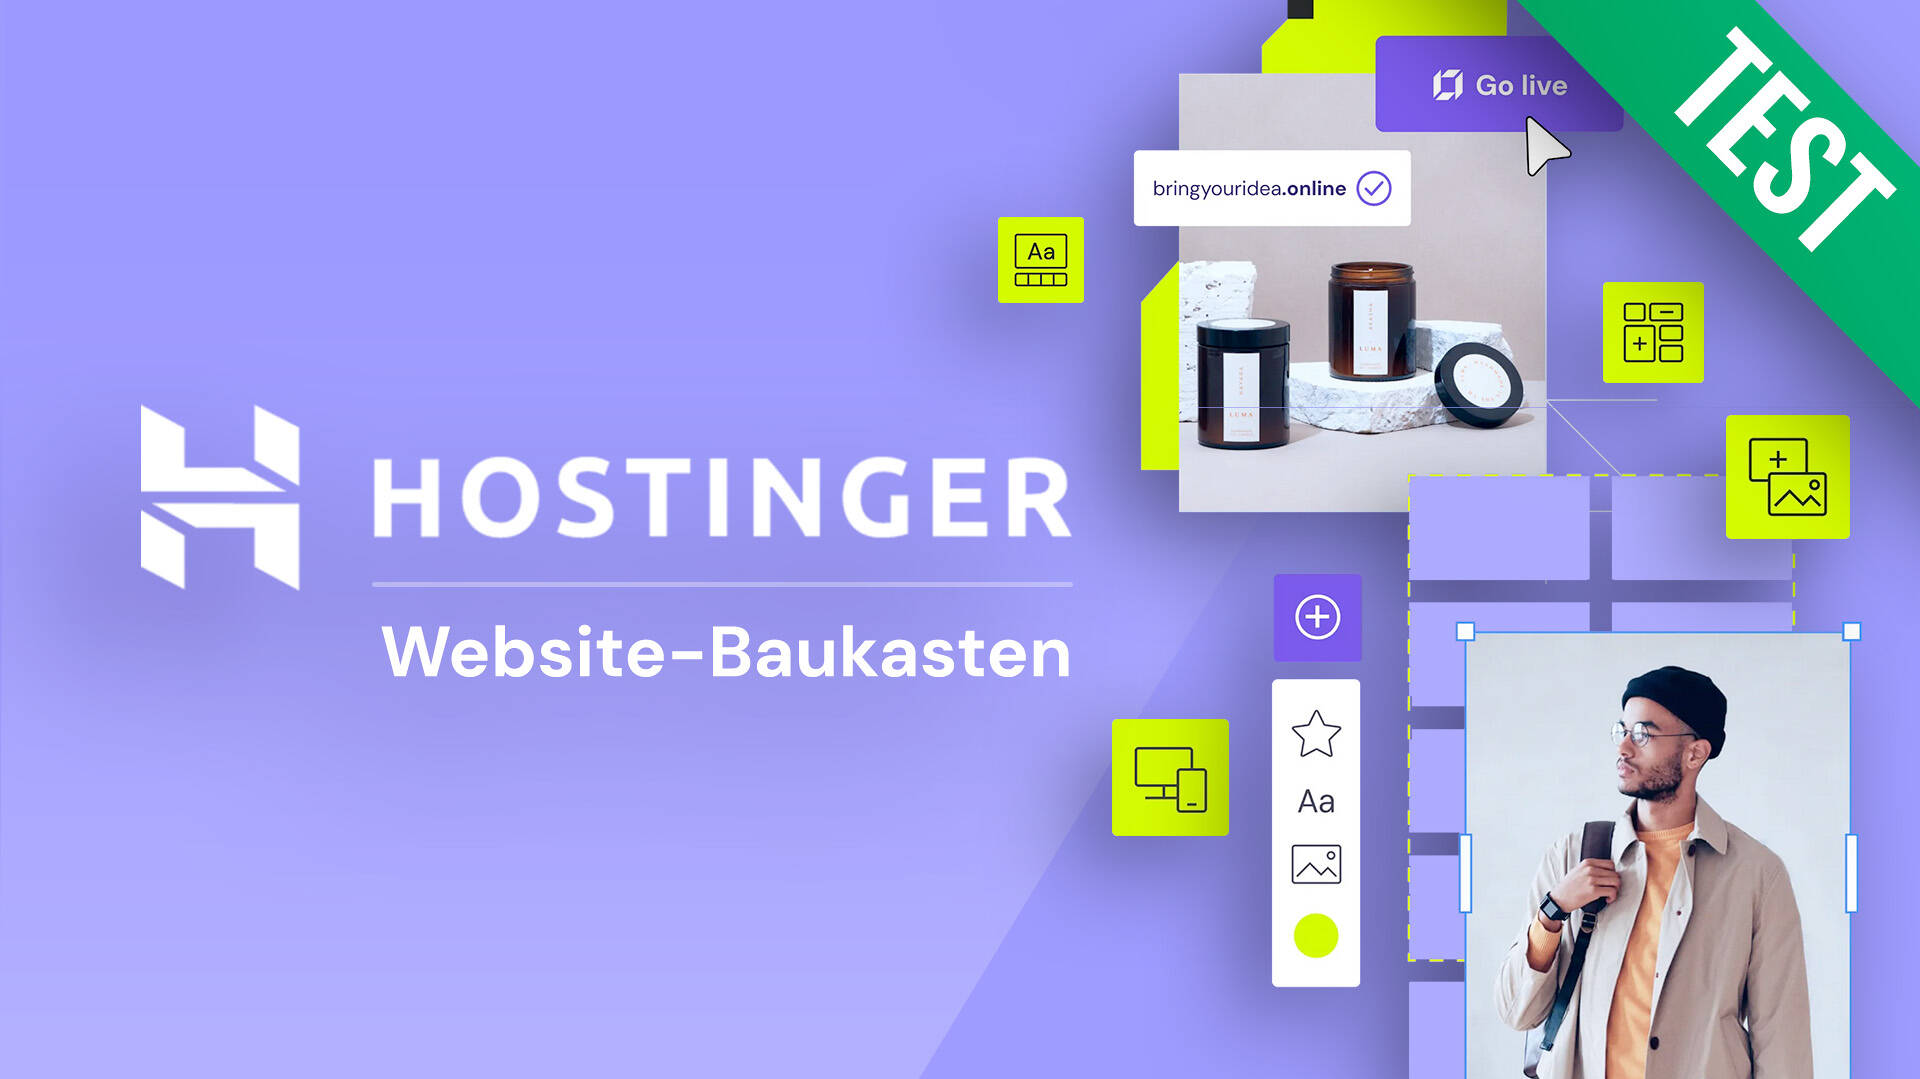 Website-Erstellung per KI: Hostinger Website-Baukasten im Test